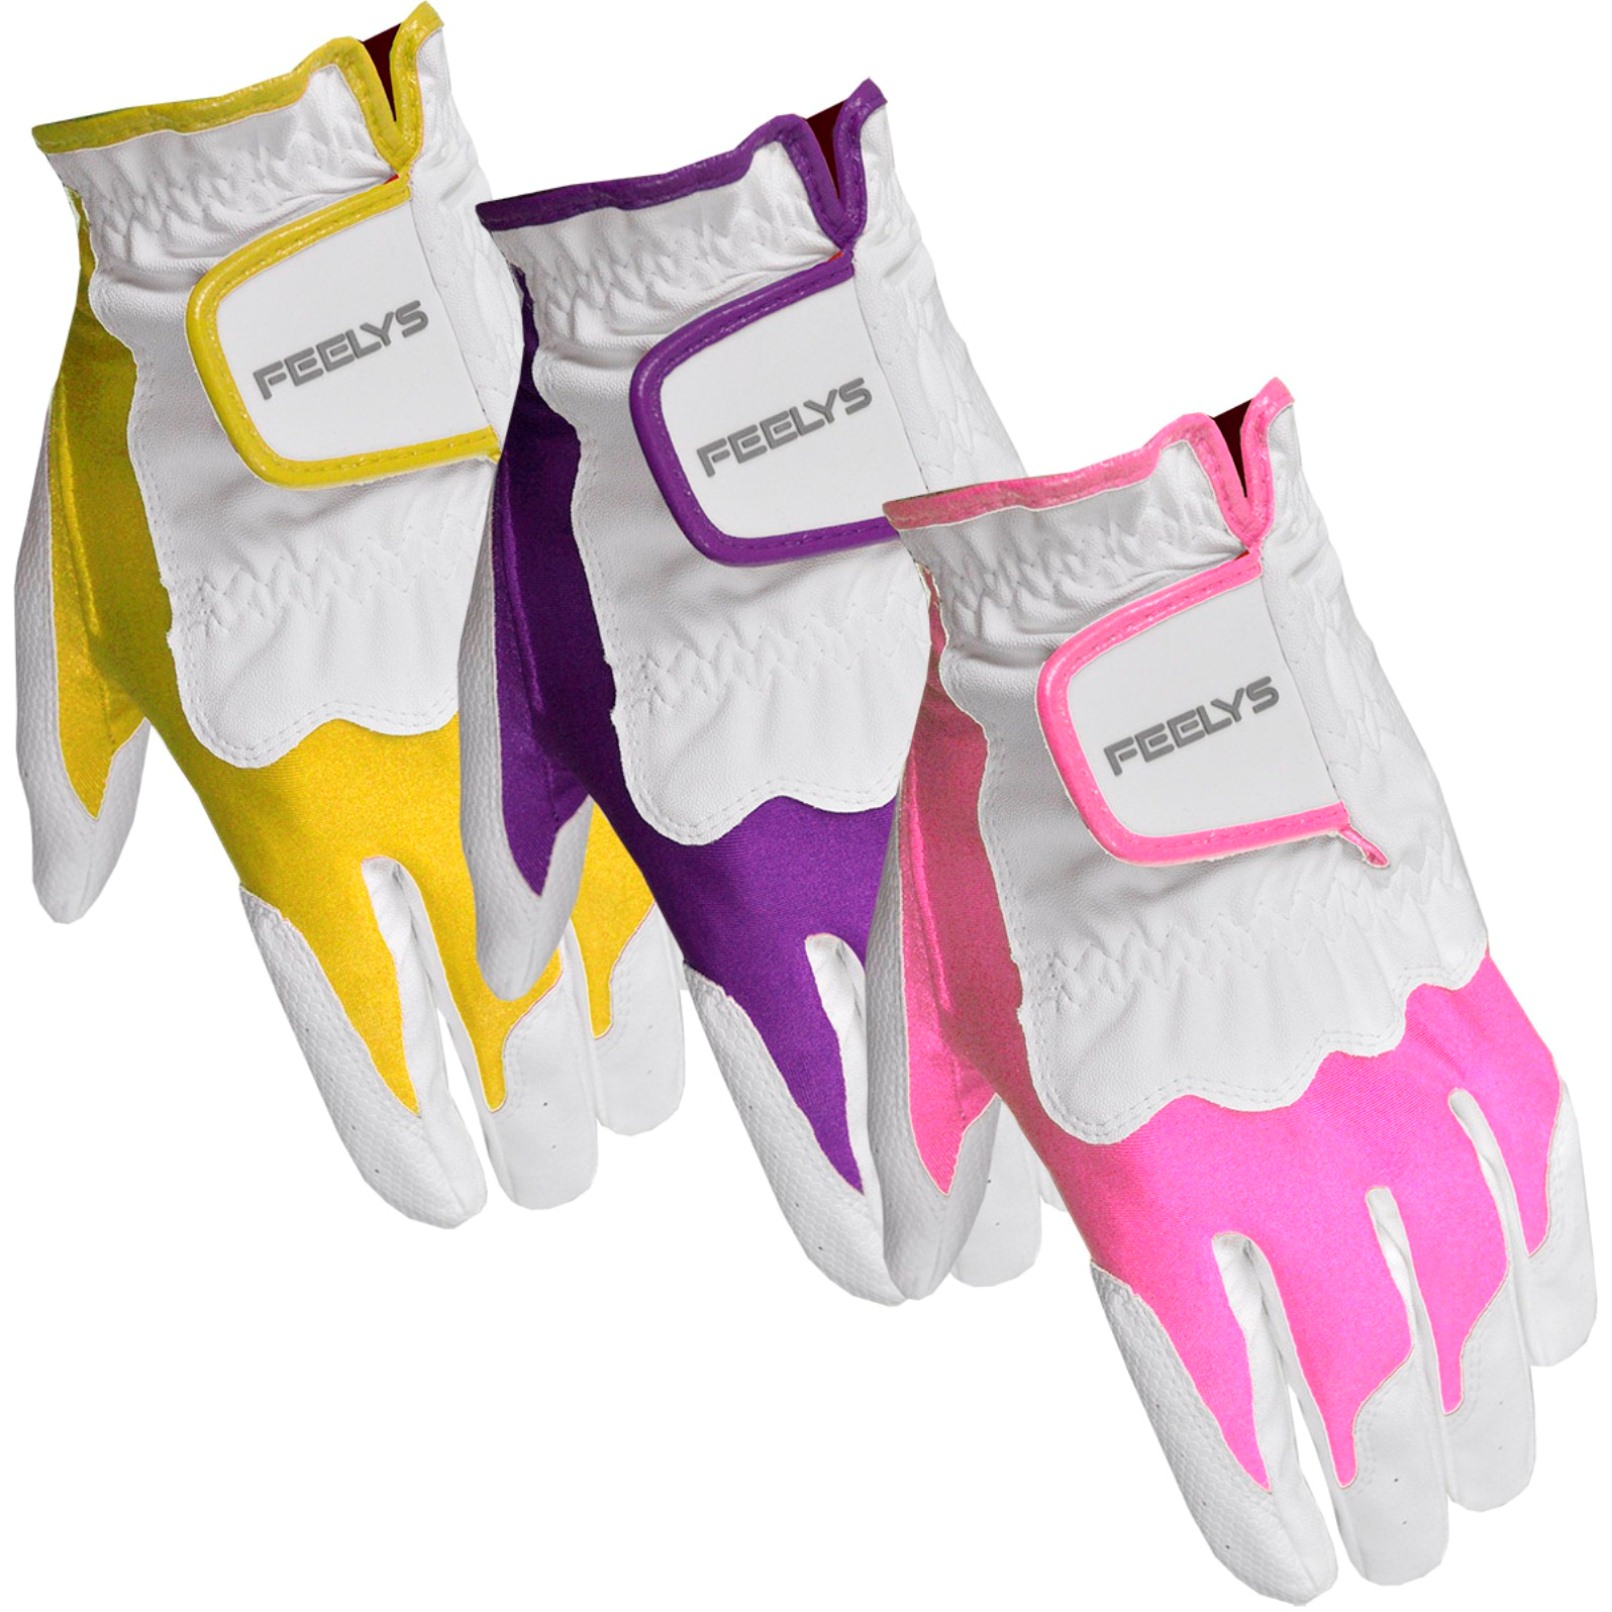 Intech Feelys Ladies LH Sm/Med Mixed Gloves